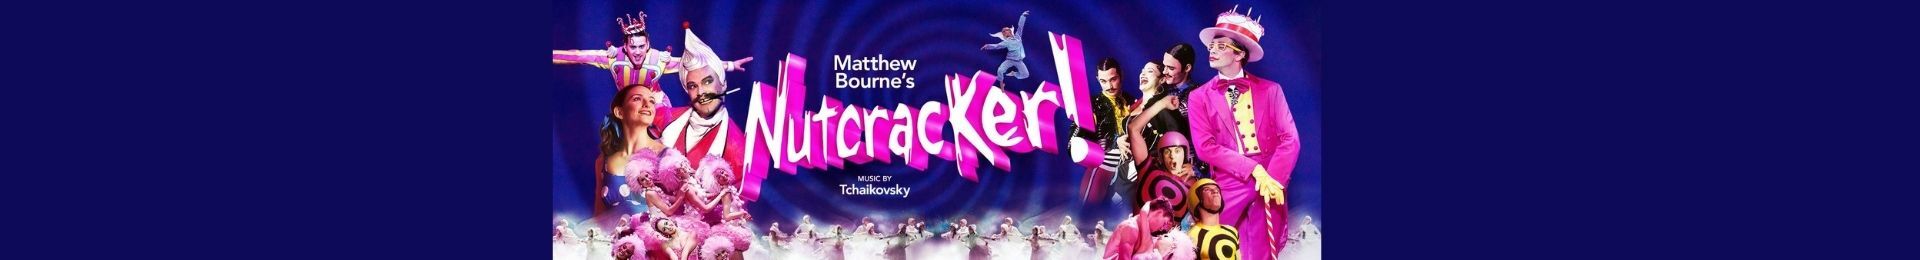 Matthew Bourne's Nutcracker! - Manchester banner image